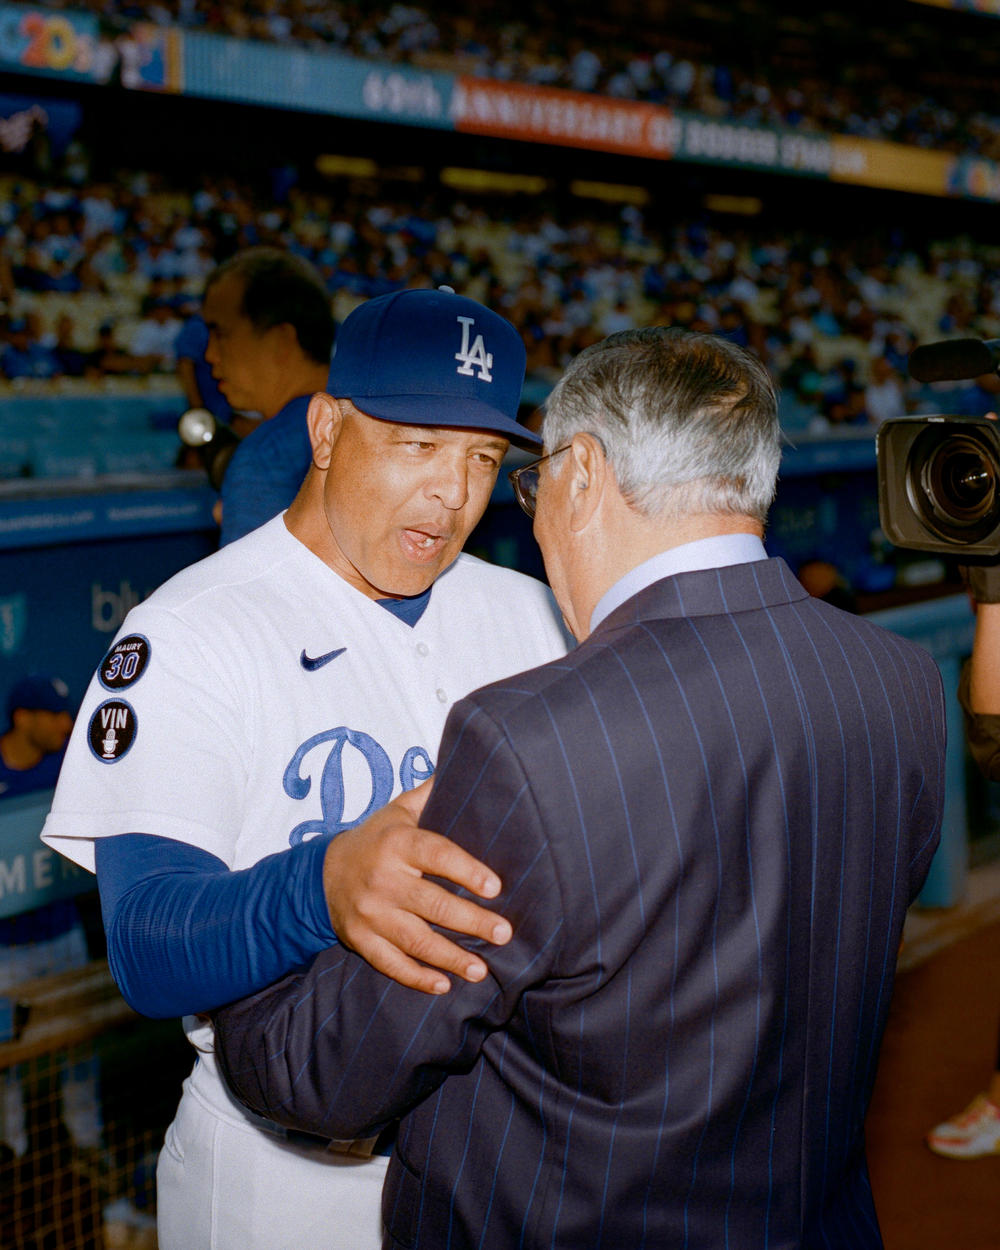 Jarrín is embraced among the team, including Dodgers manager Dave Roberts.